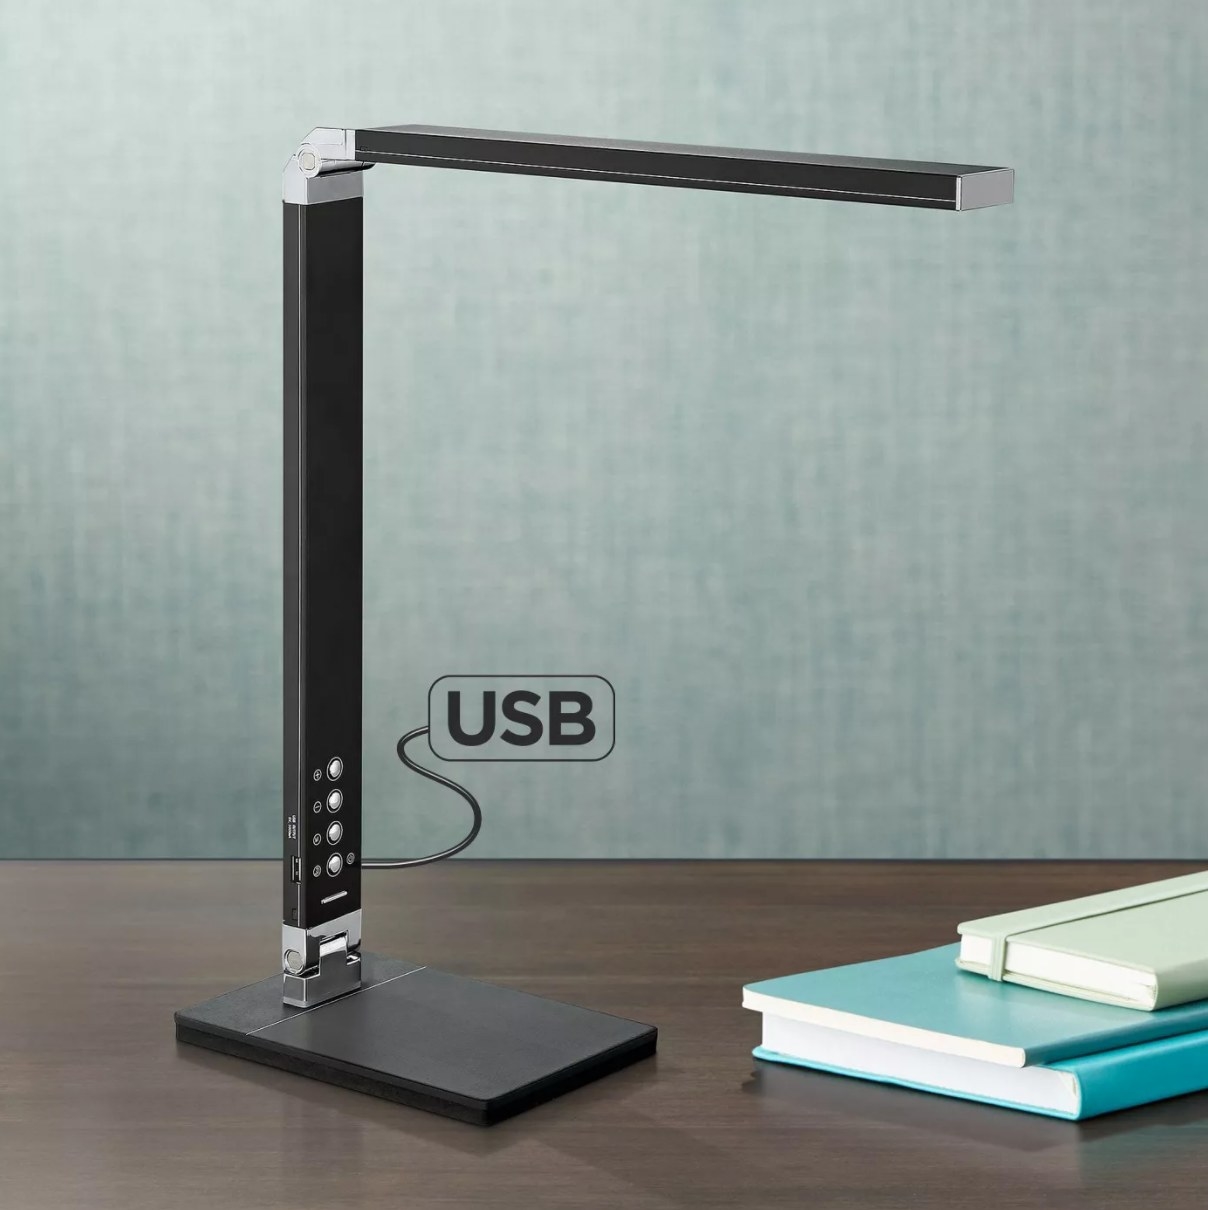 The USB desk light in black